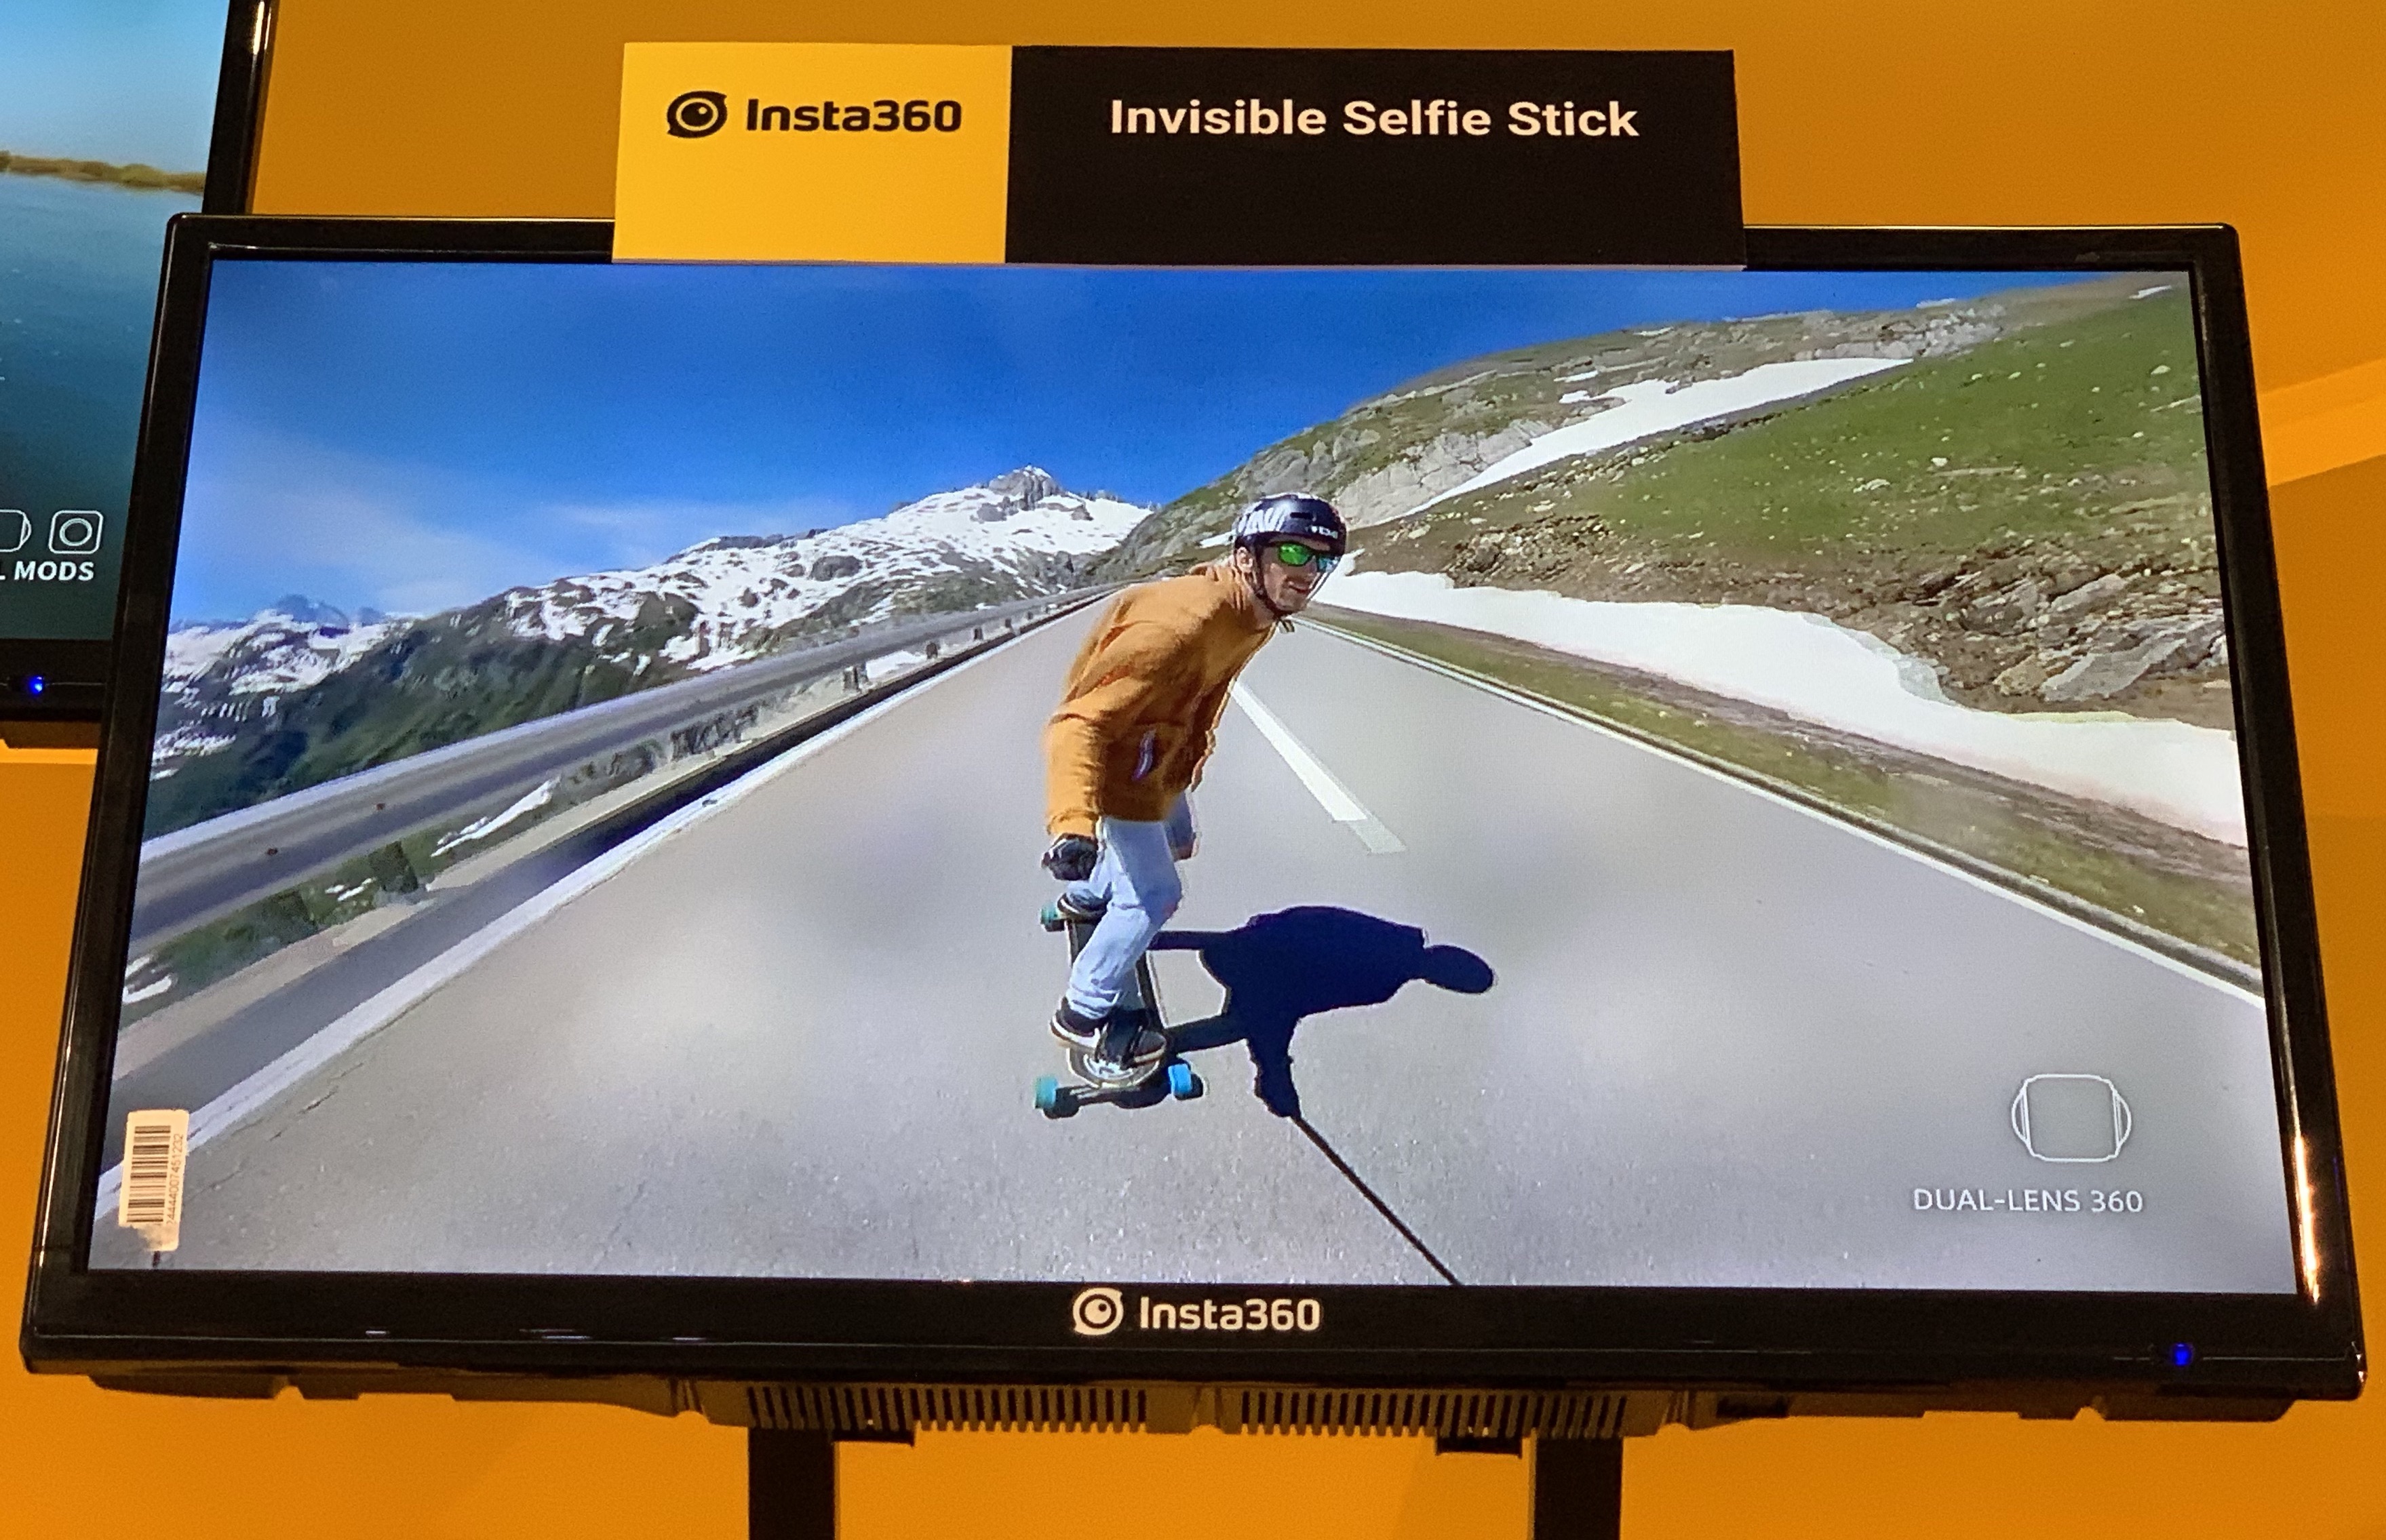 Insta 360 invisible selfie stick